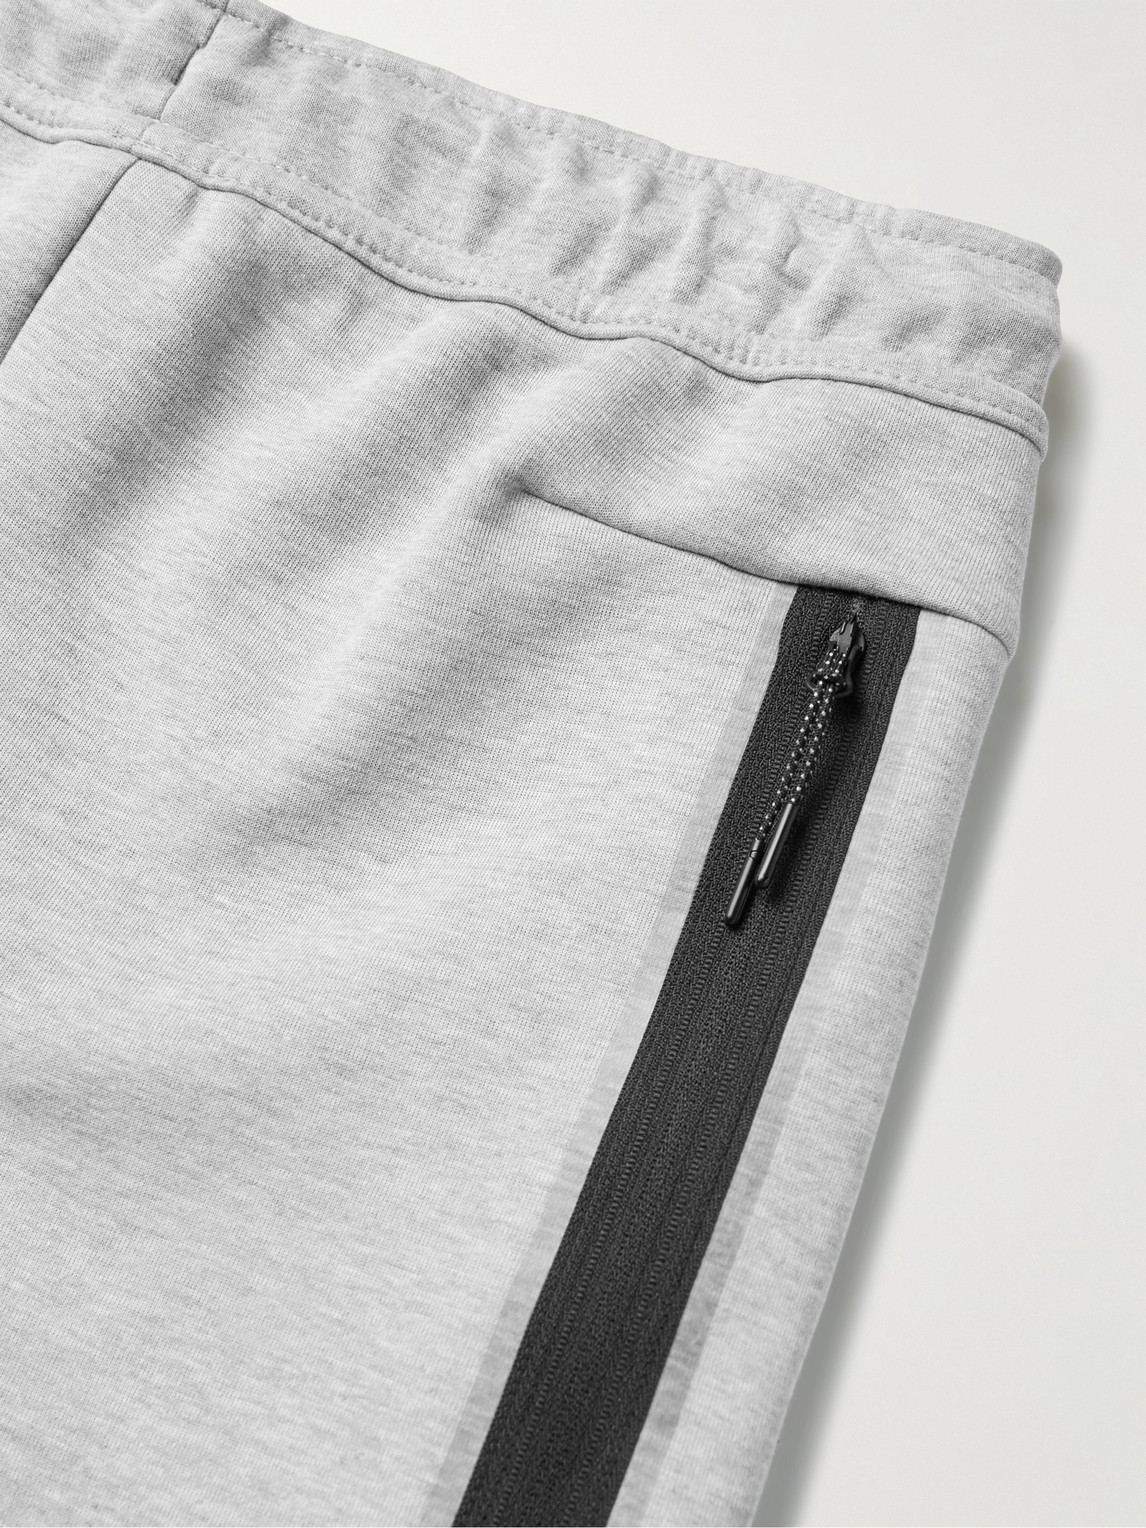 Nike - Sportswear Tapered Logo-Print Cotton-Blend Tech-Fleece Sweatpants -  Men - Gray - S ل رجال